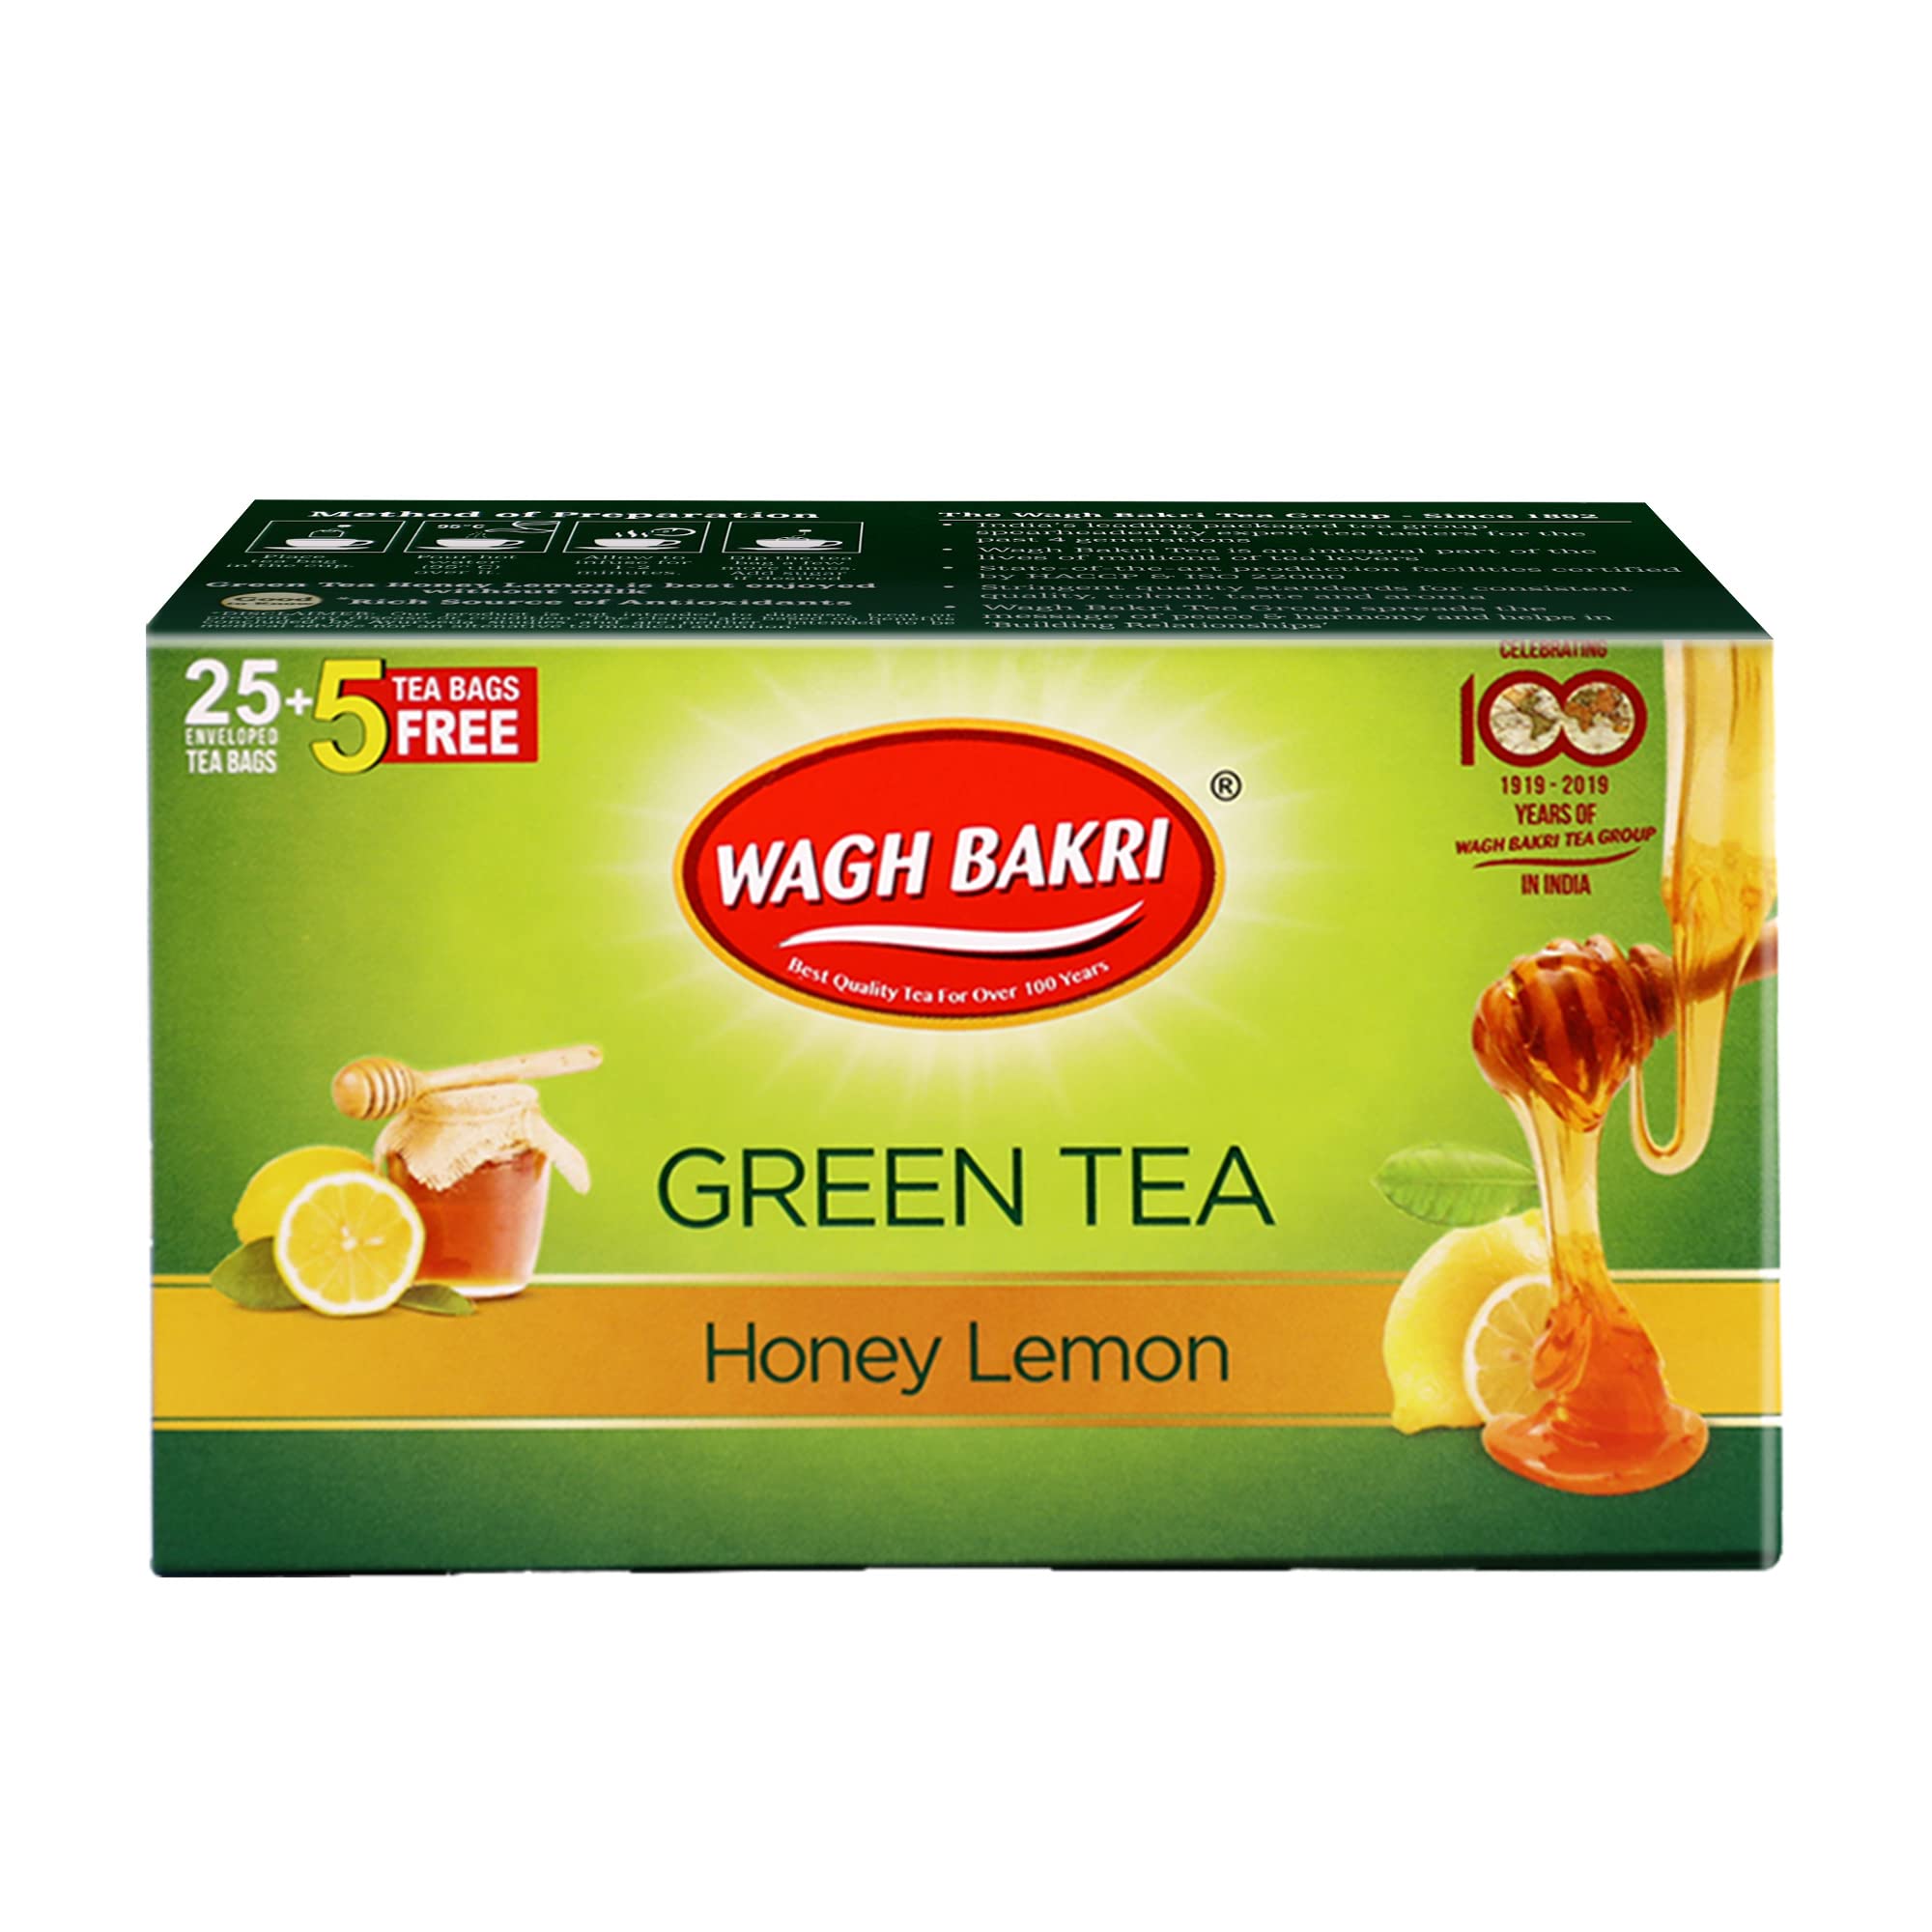 WAGH BAKRI GREEN TEA HONEY LEMON 25 TEA BAGS 37g